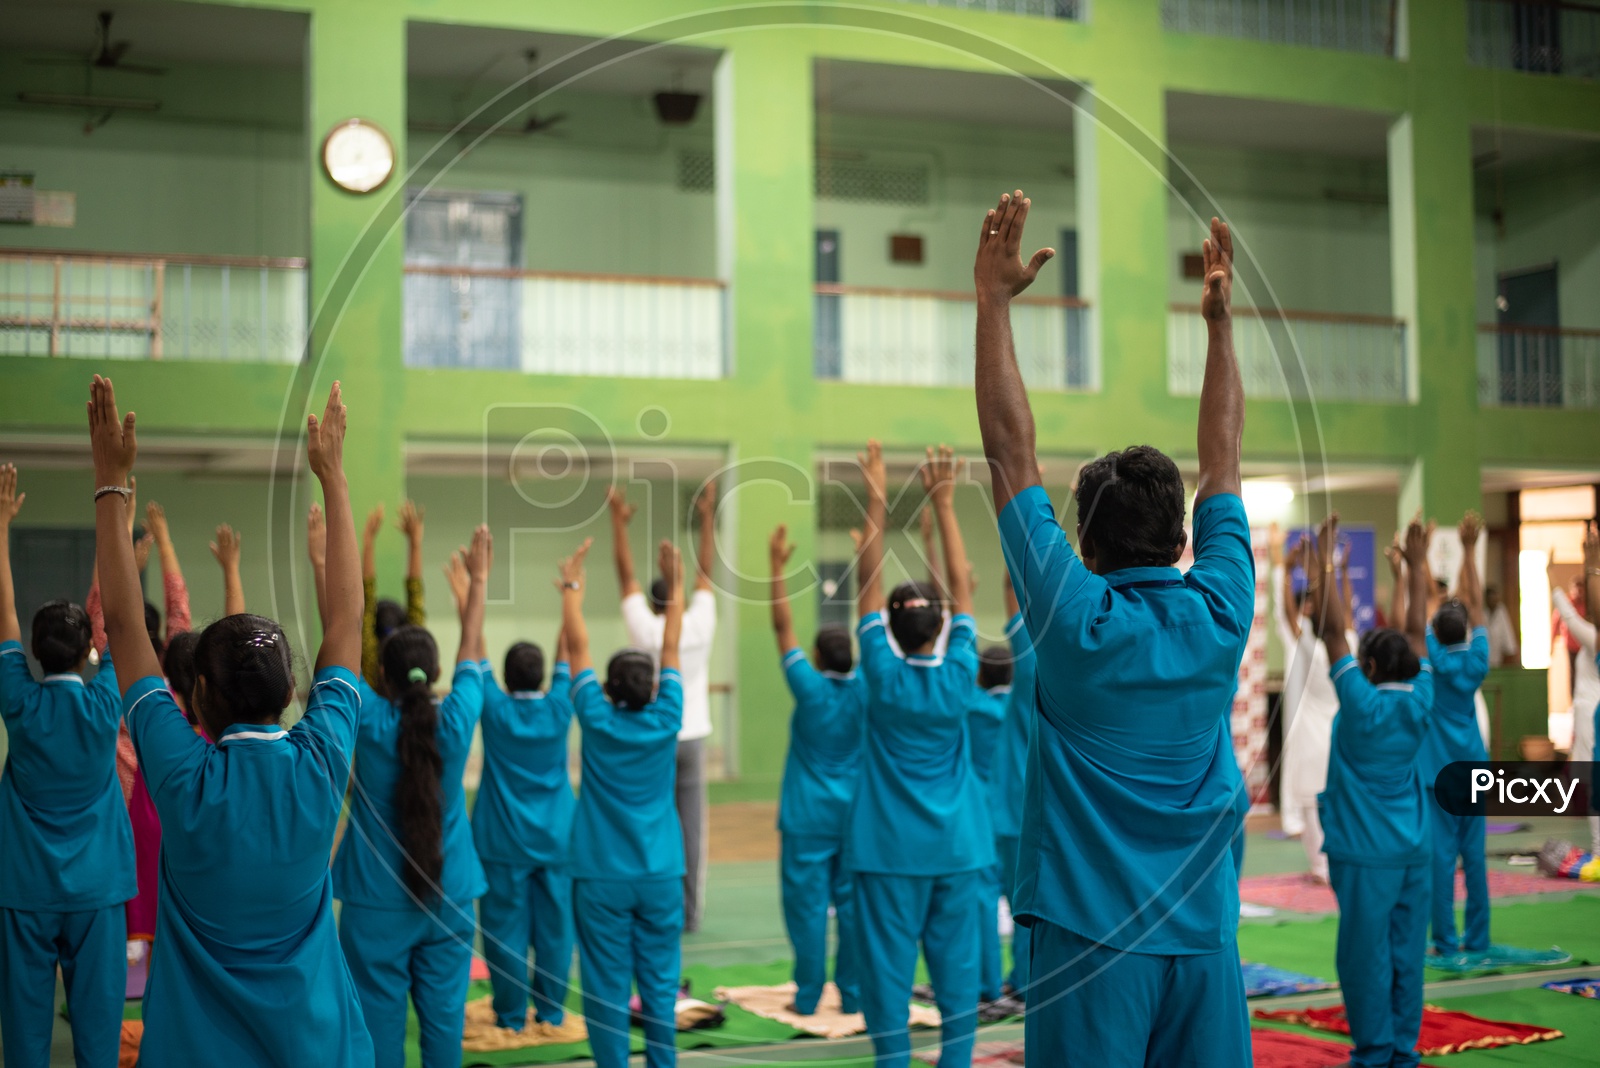 Hospital nurses Practicing Yoga, International Yoga Day, 2018.